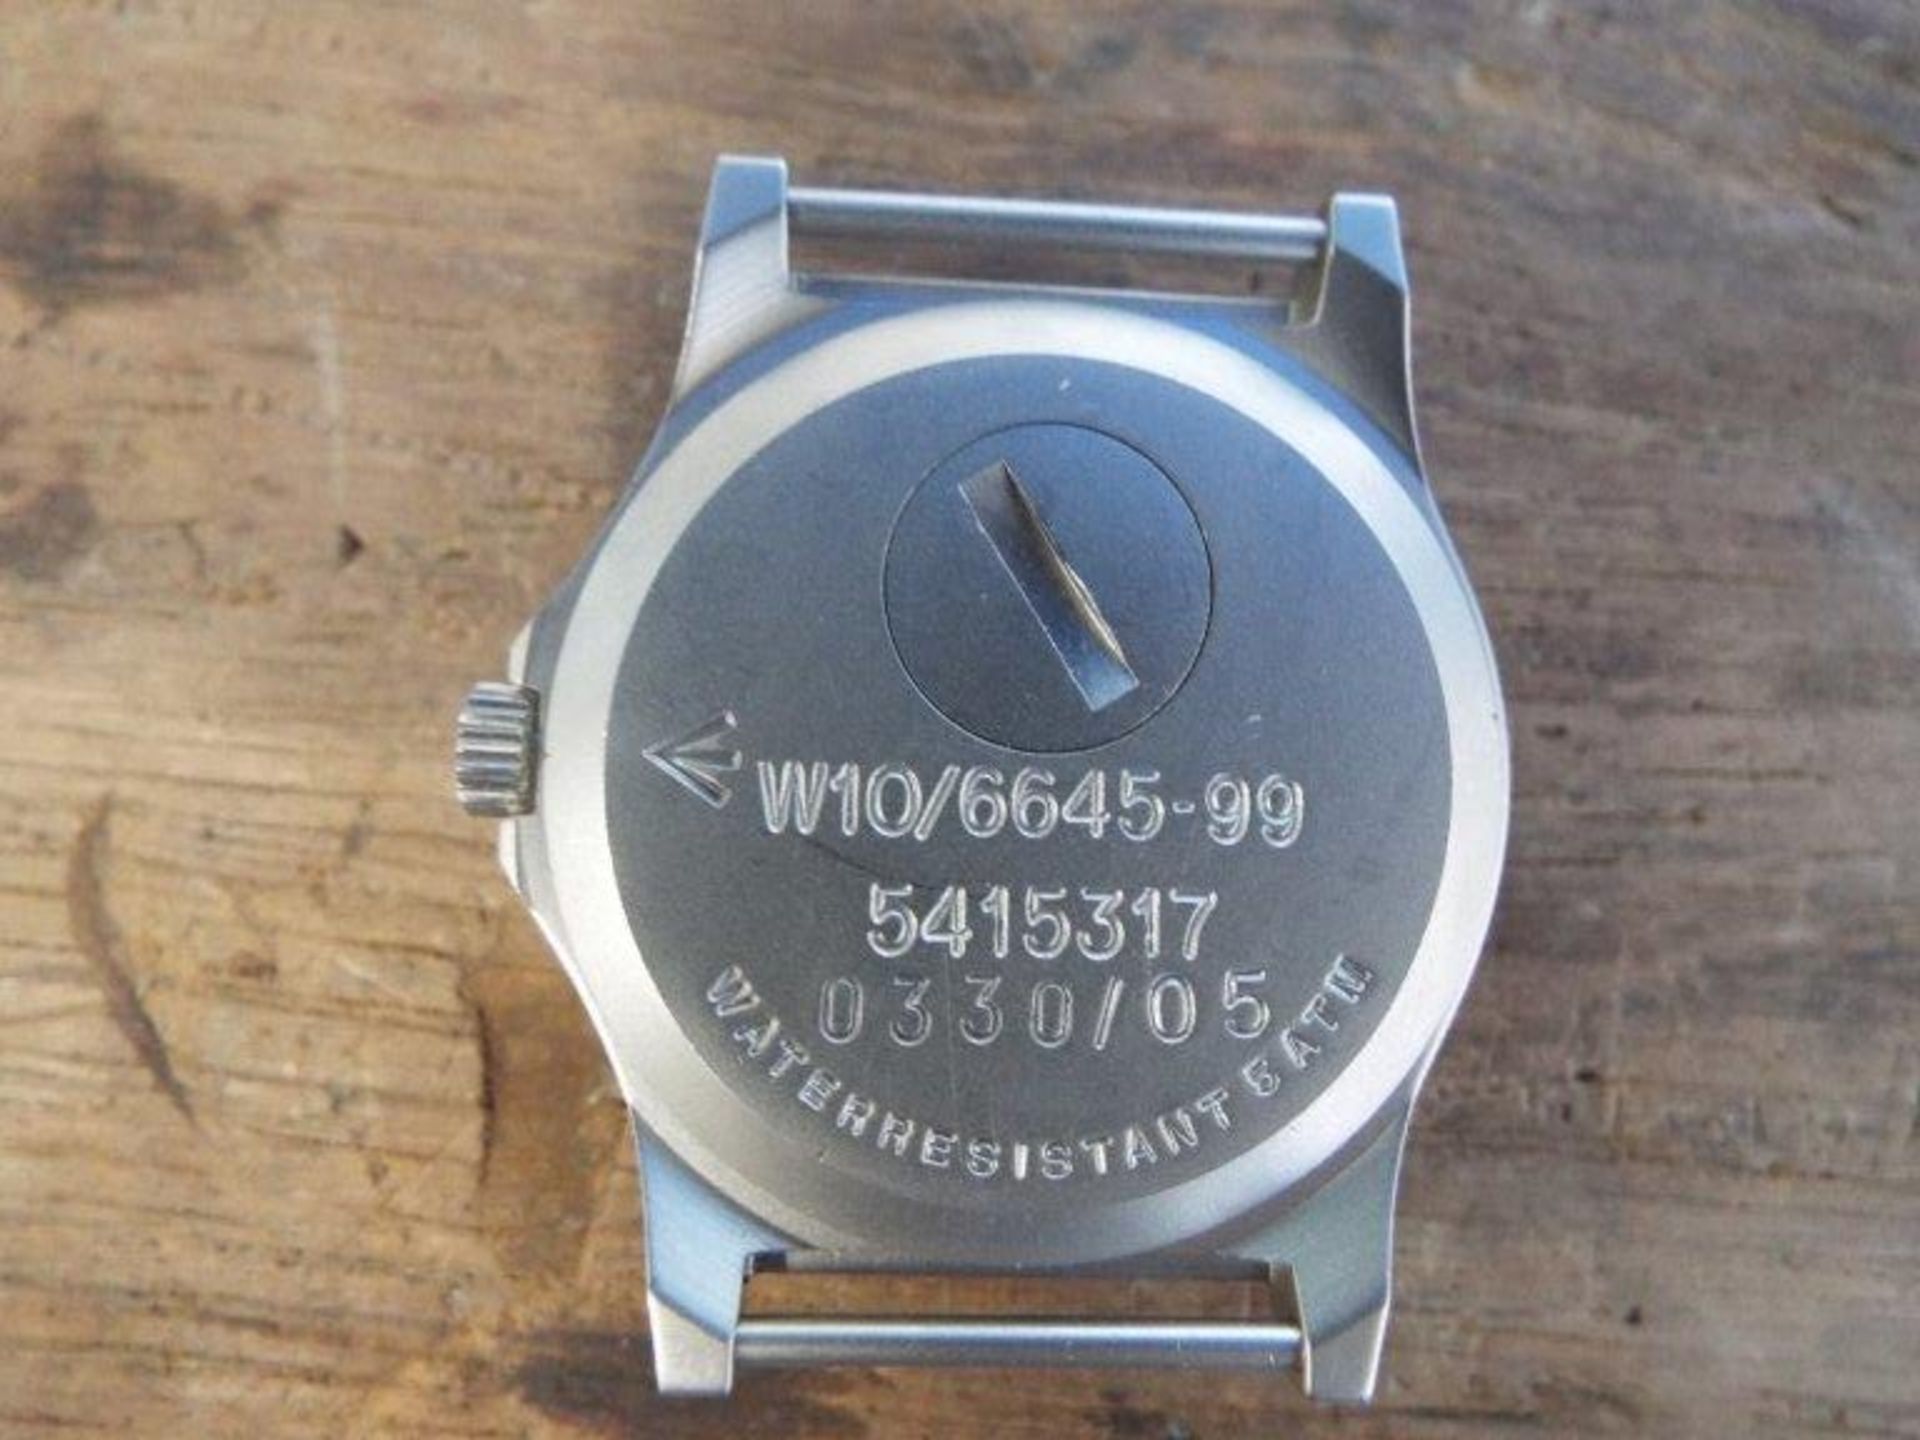 Waterproof CWC Quartz Wrist Watch - Image 6 of 7